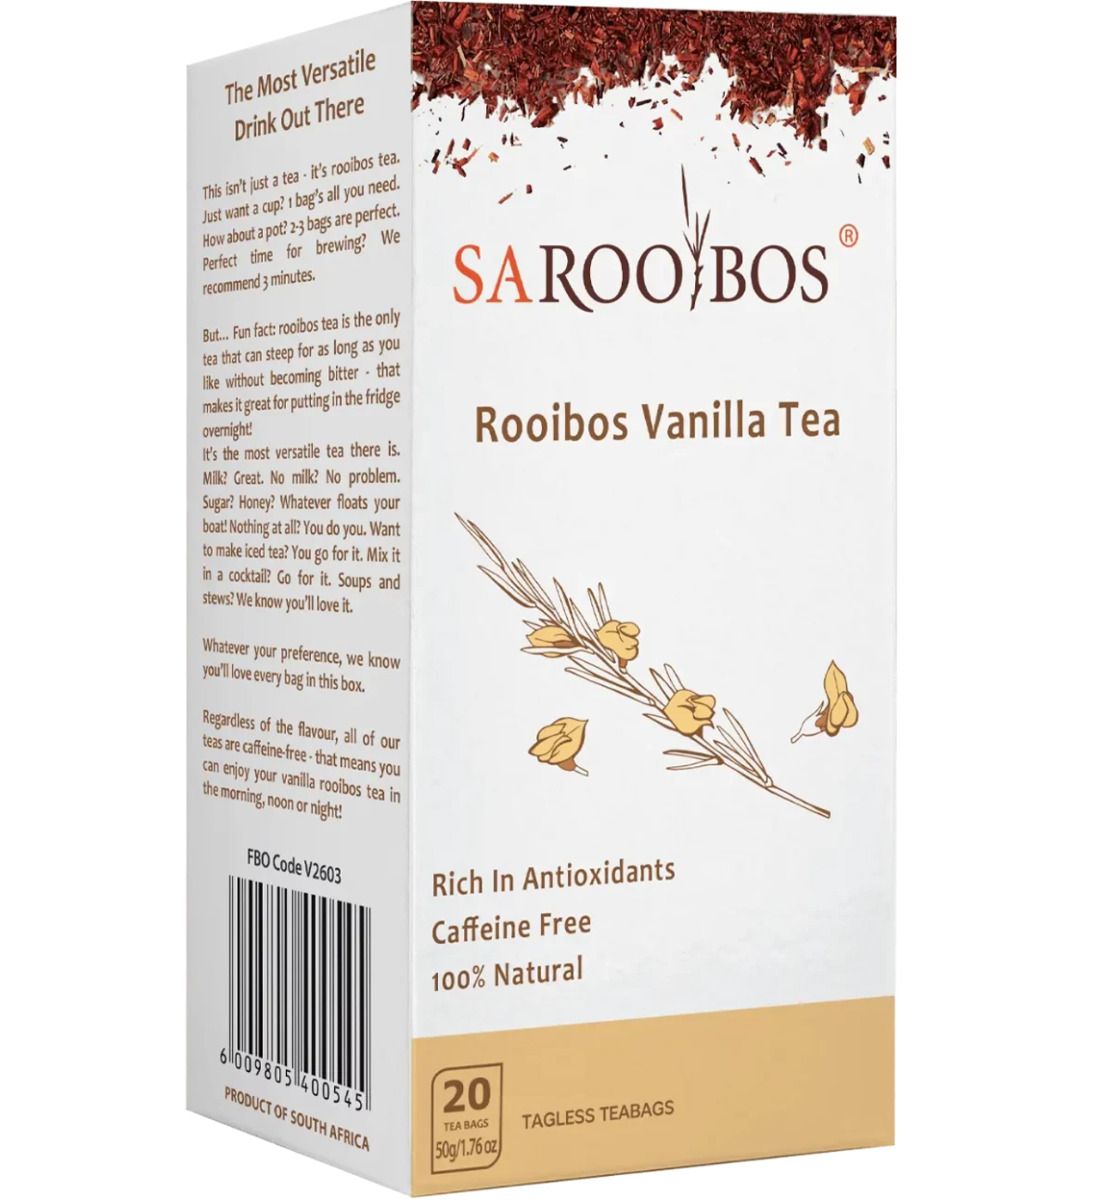 SA ROOIBOS - organiczna herbata Rooibos Vanilla Tea, waniliowa, bez kofeiny, bogata w antyoksydanty 20 saszetek